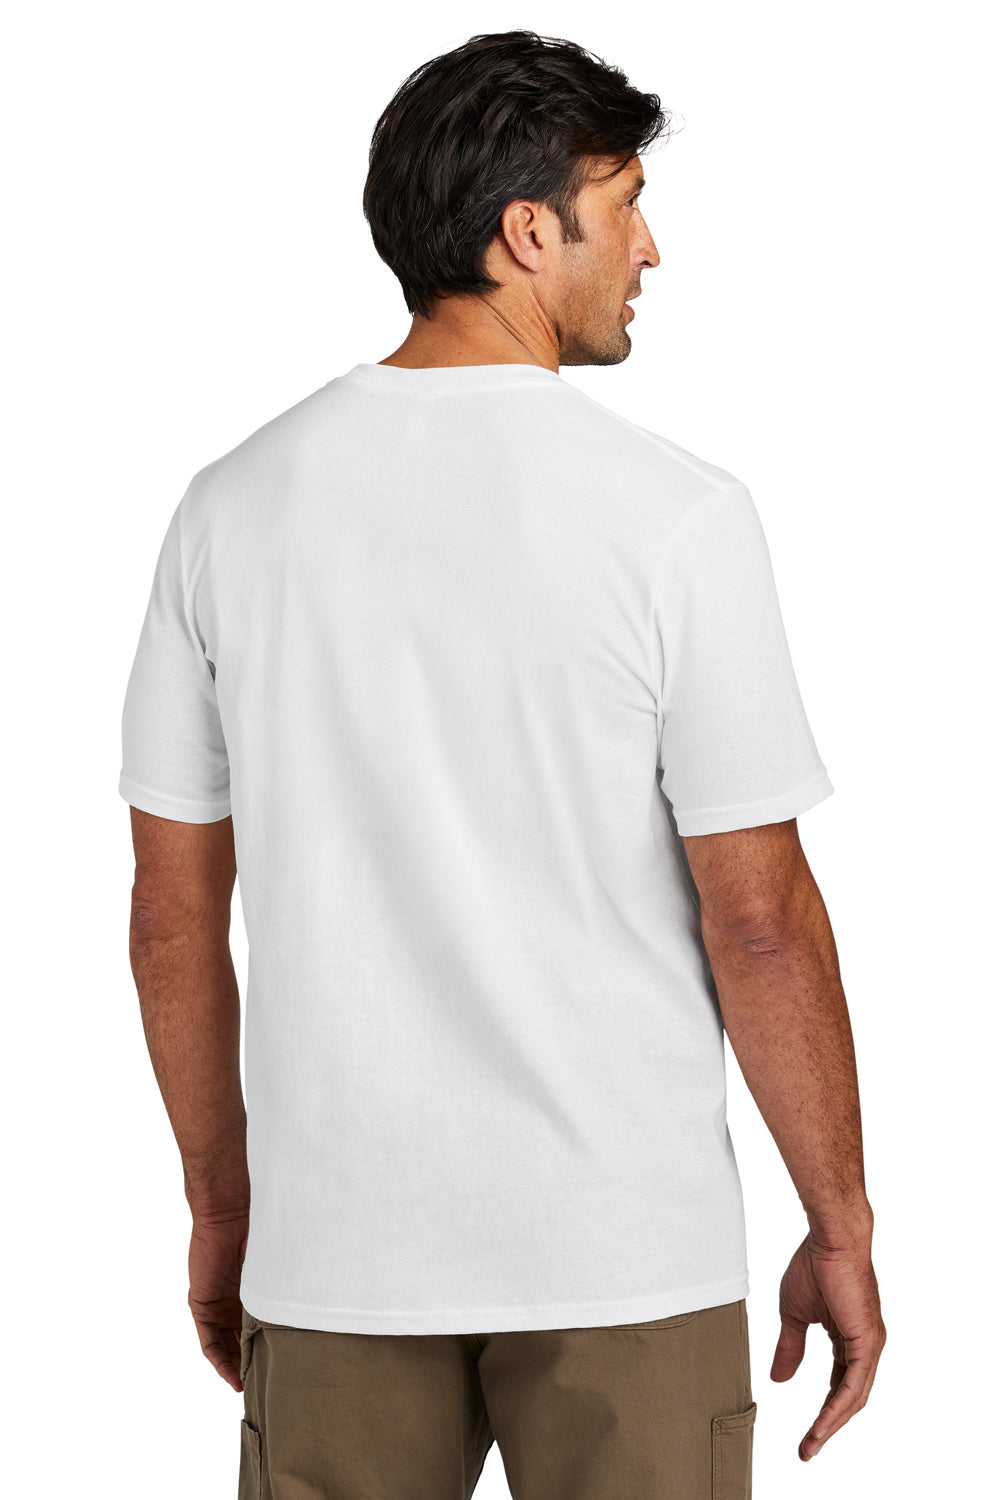 Volunteer Knitwear VL100P USA Made All American Short Sleeve Crewneck T-Shirt w/ Pocket White Back